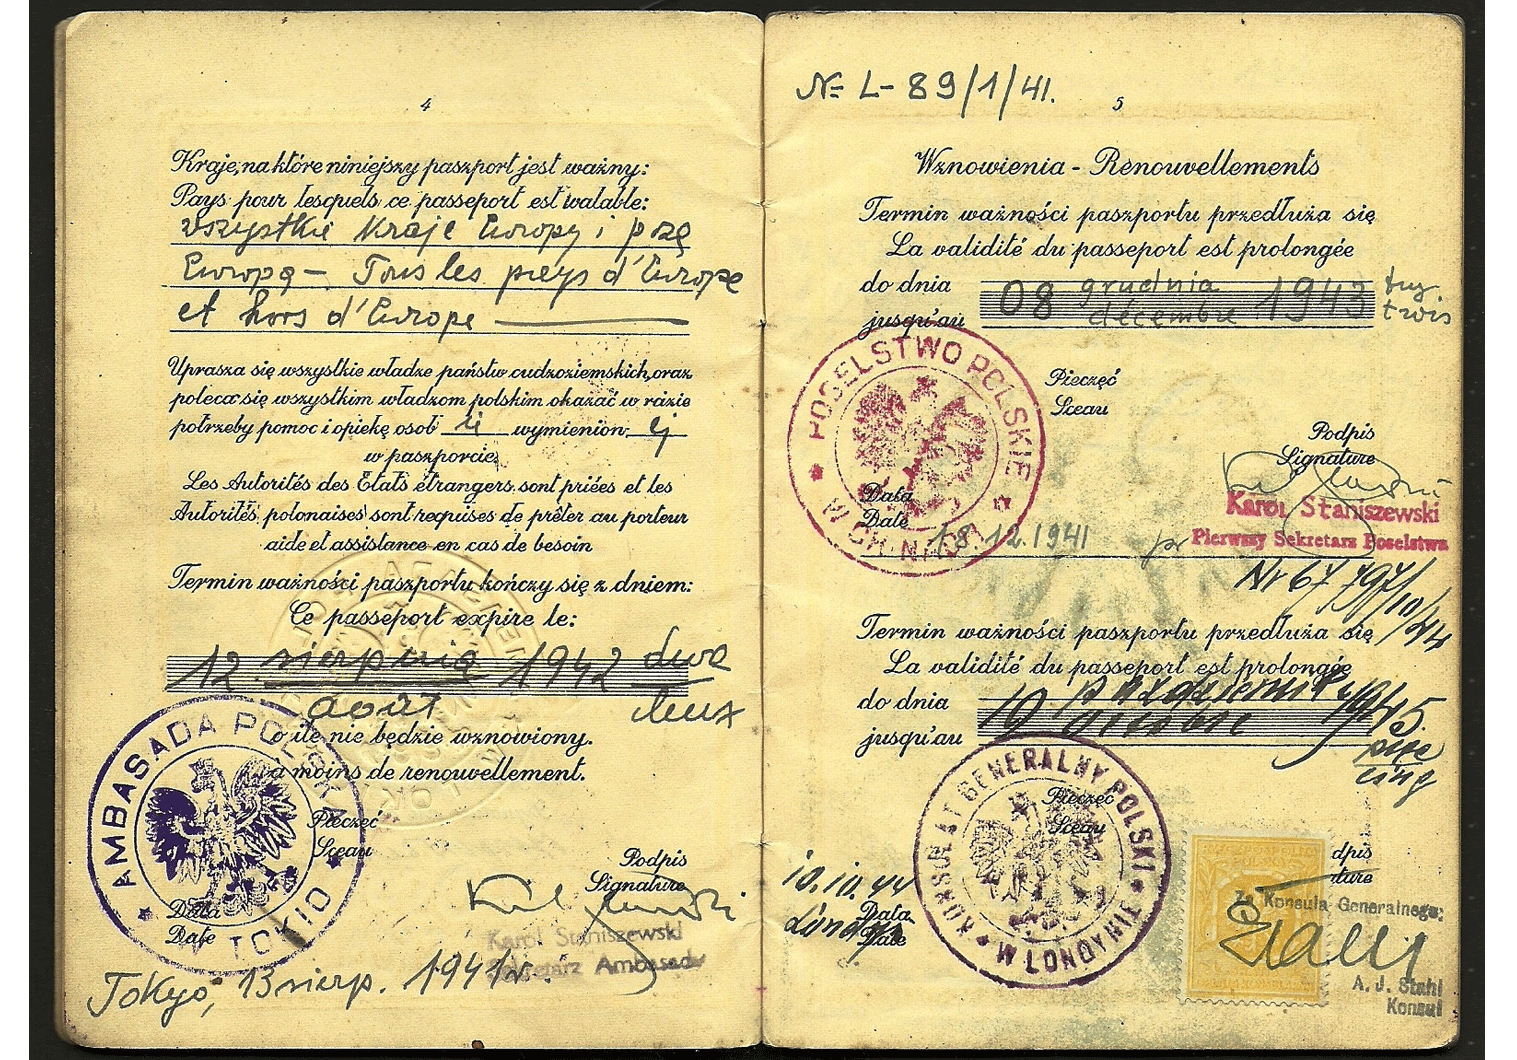 WW2 Polish passport